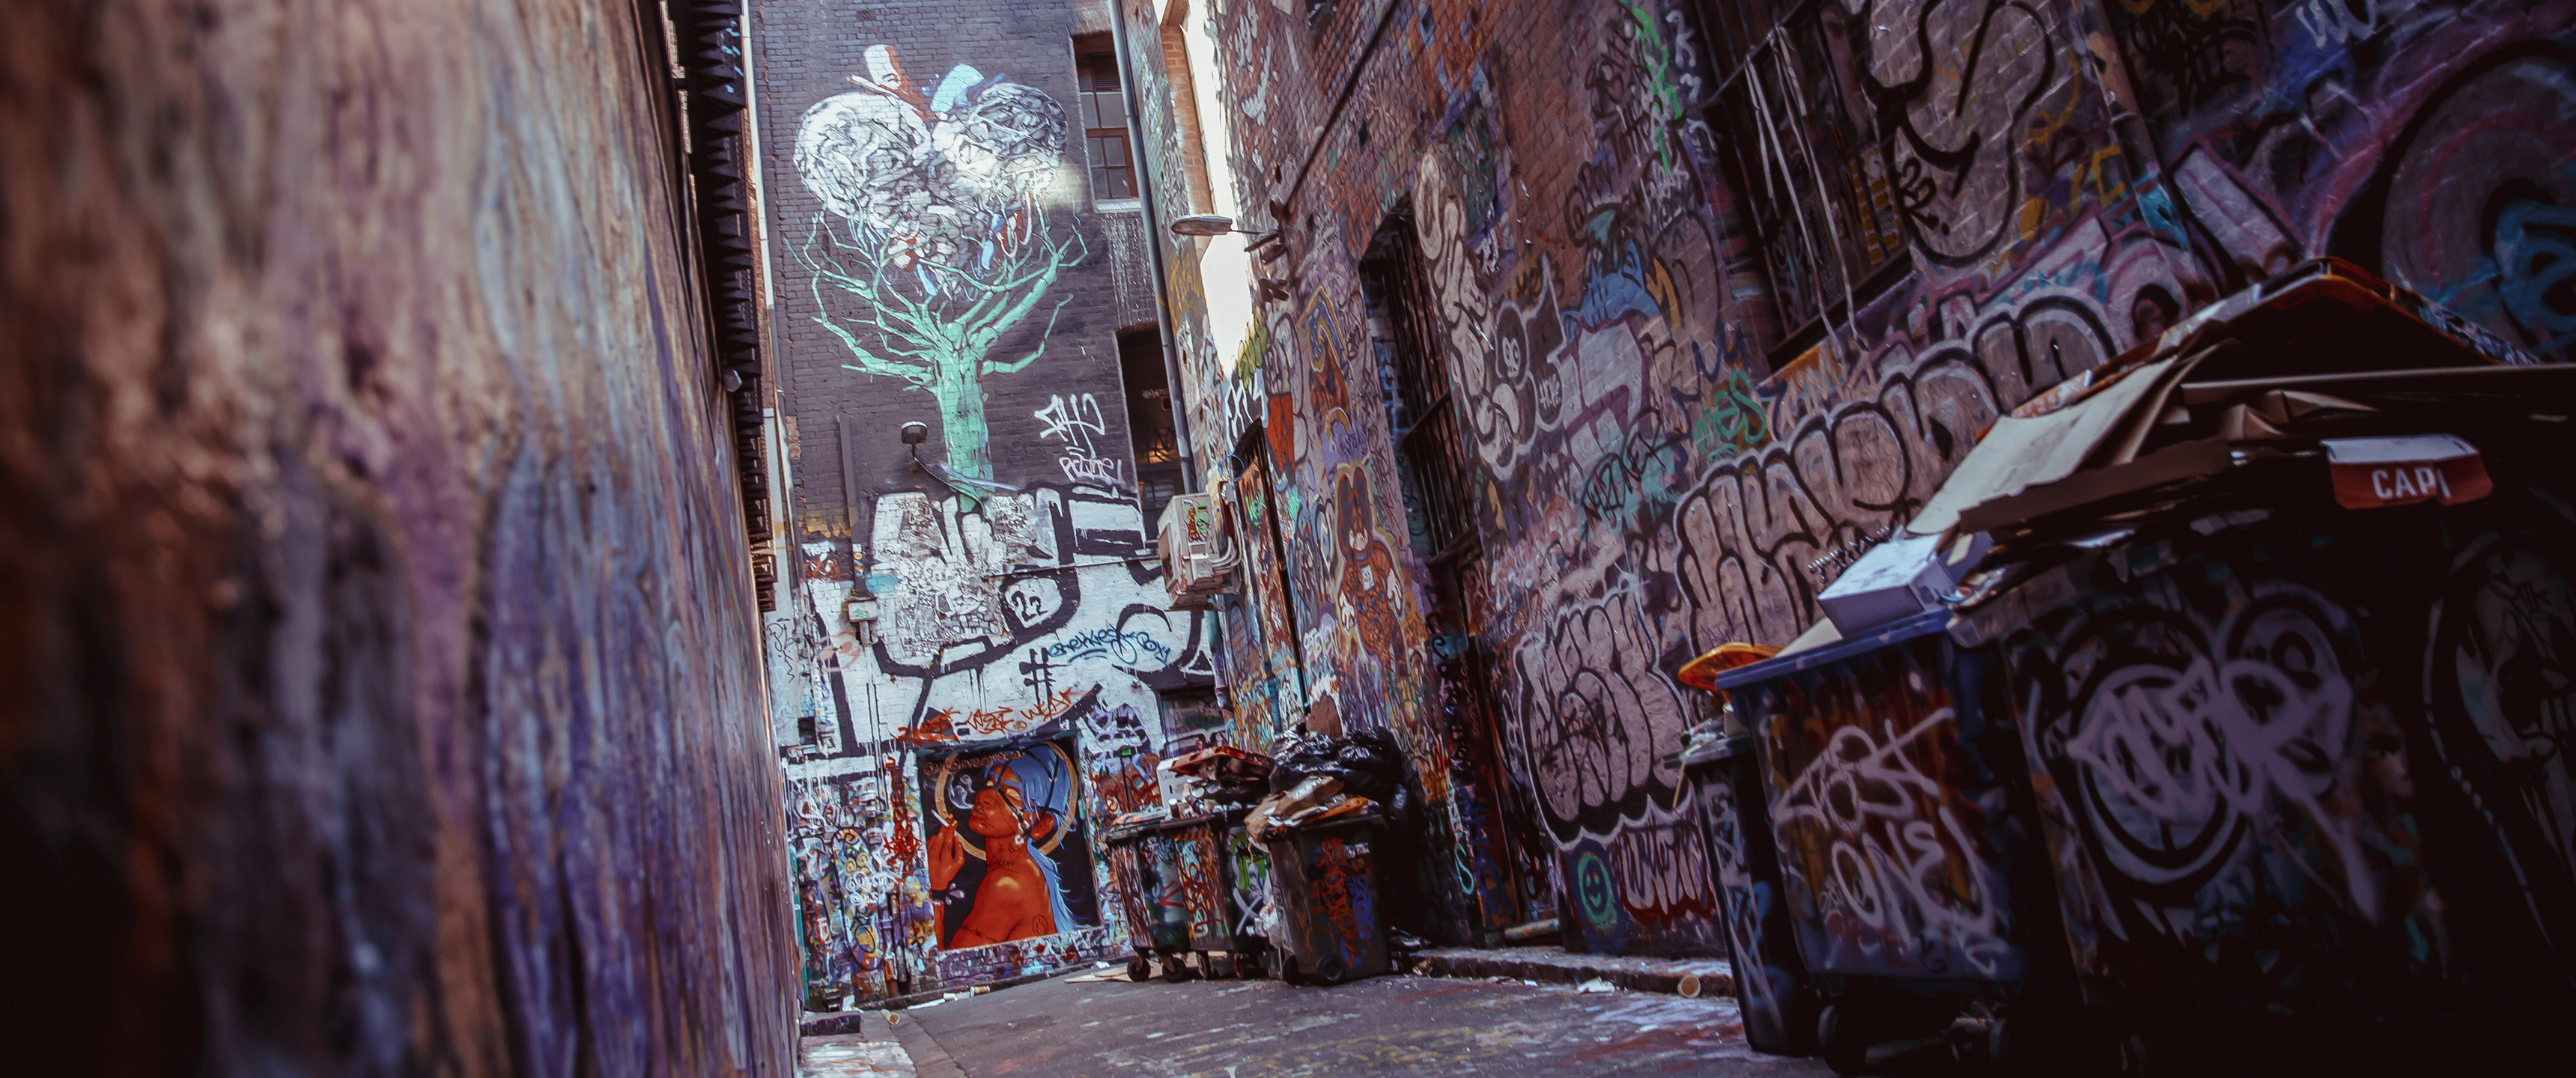 General 3440x1440 Melbourne city Australia graffiti alleyway angle view